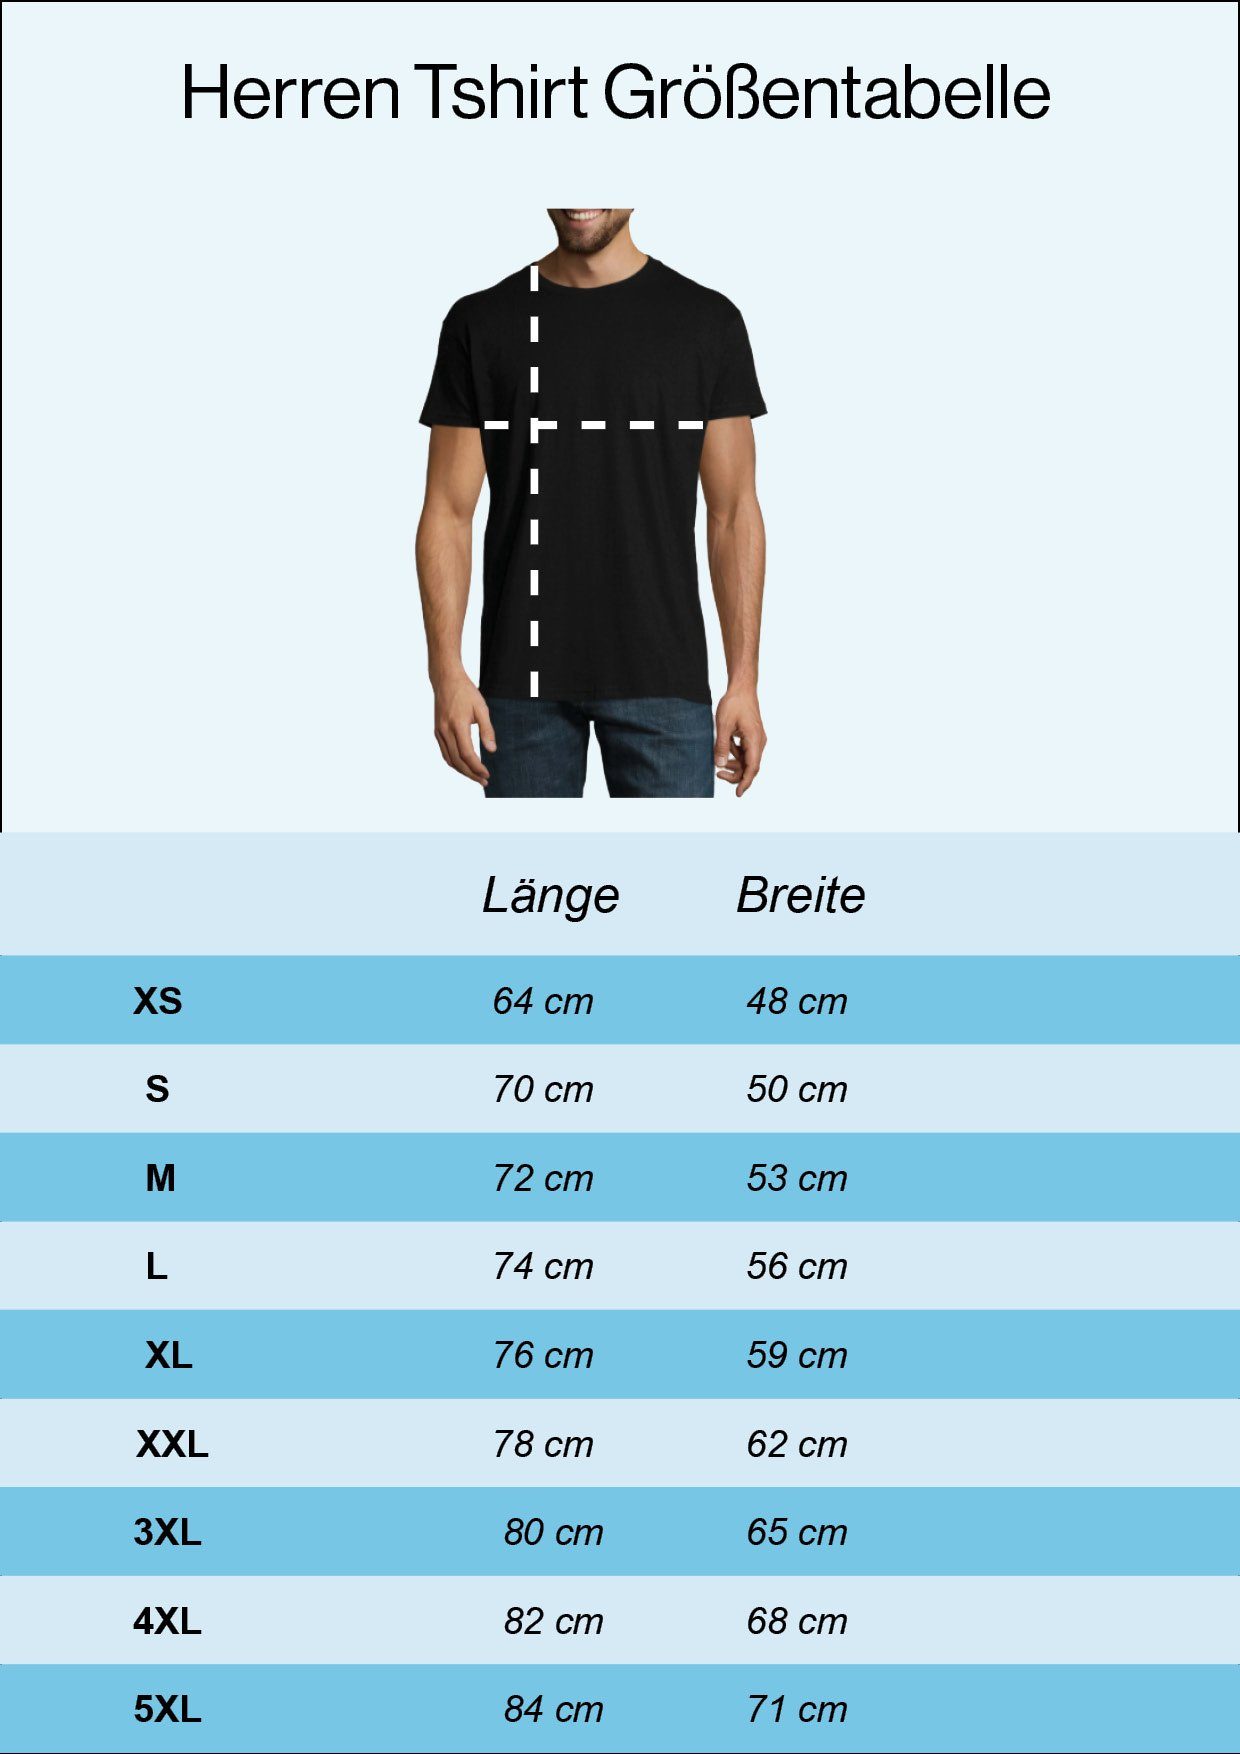 Herren Shirts Youth Designz T-Shirt Evolution Gaming Herren Shirt mit lustigem Gaming Motiv